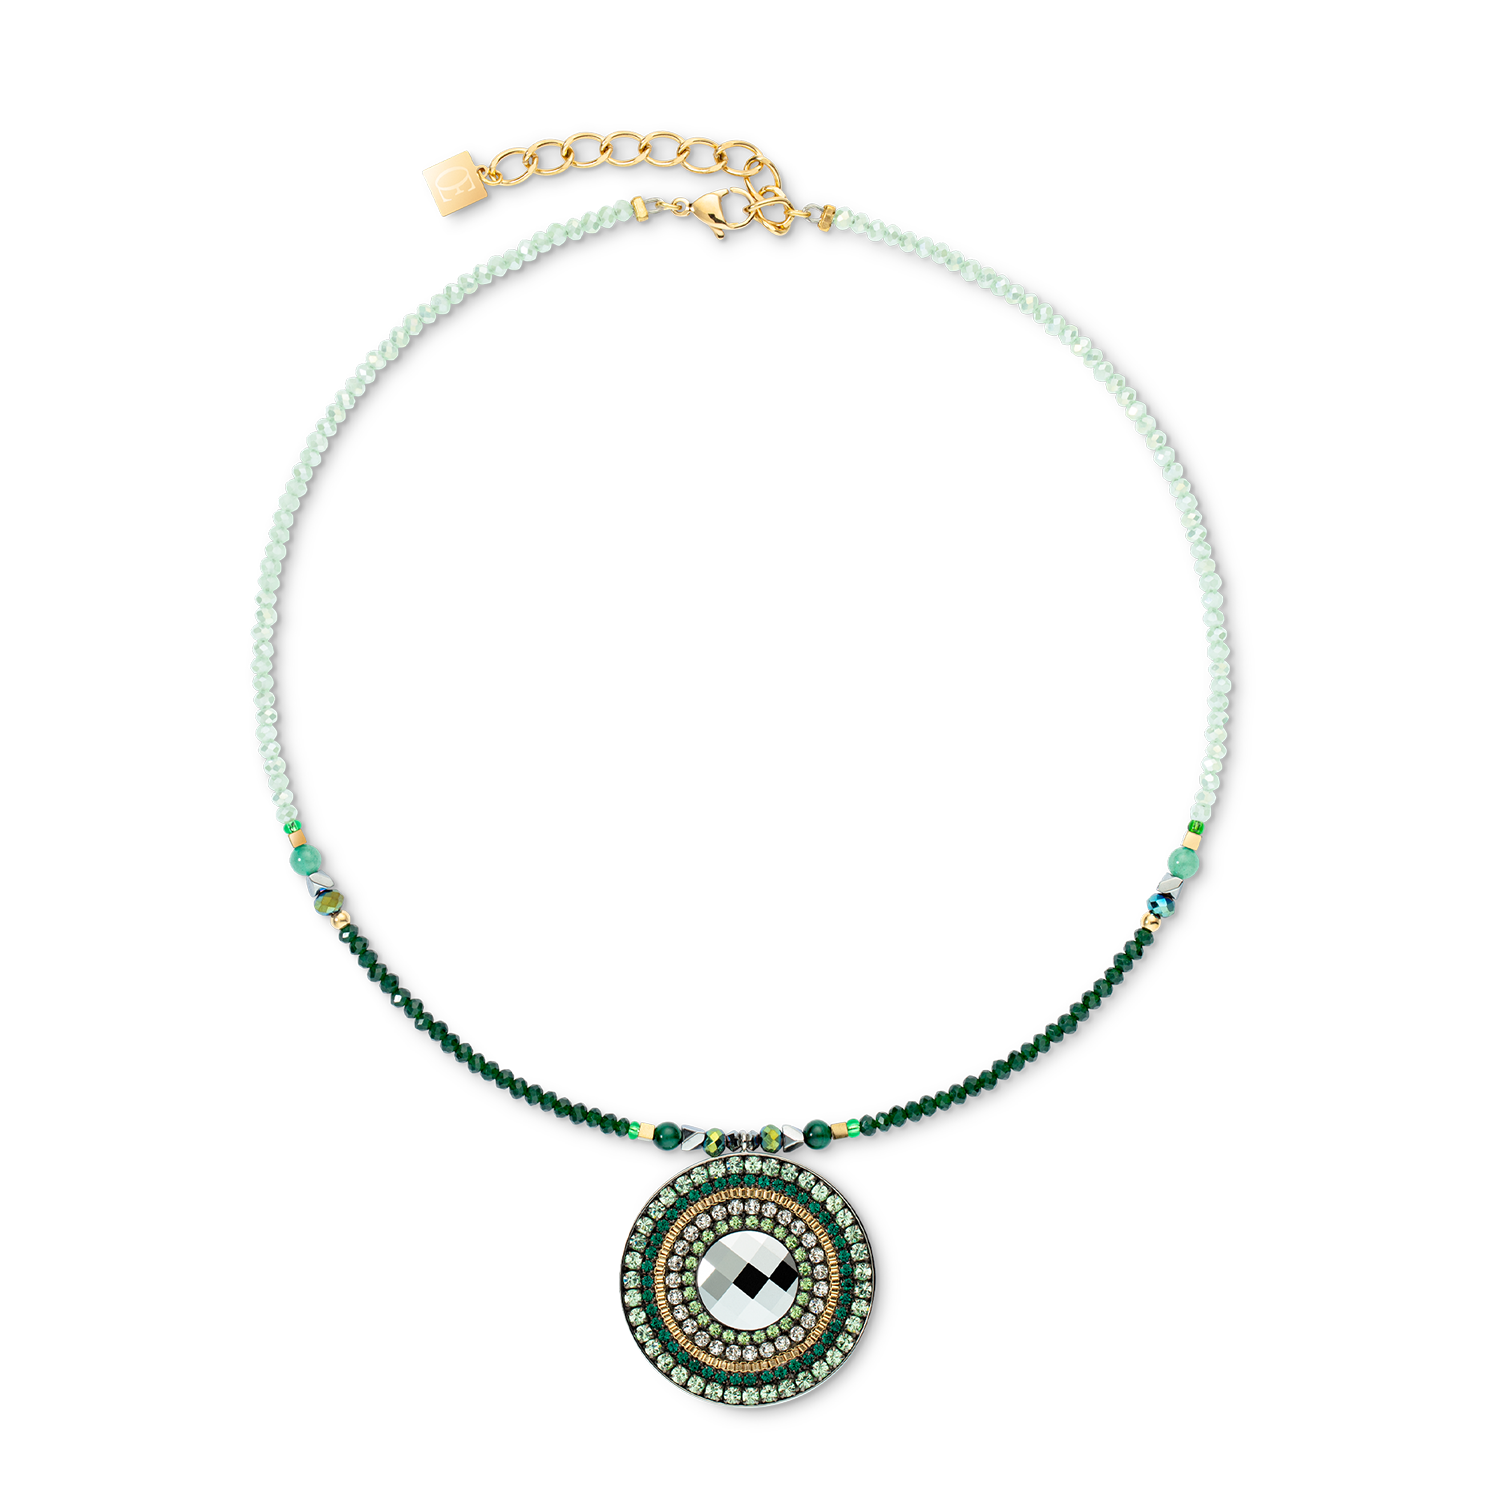 Necklace Amulet Glamorous Green gold